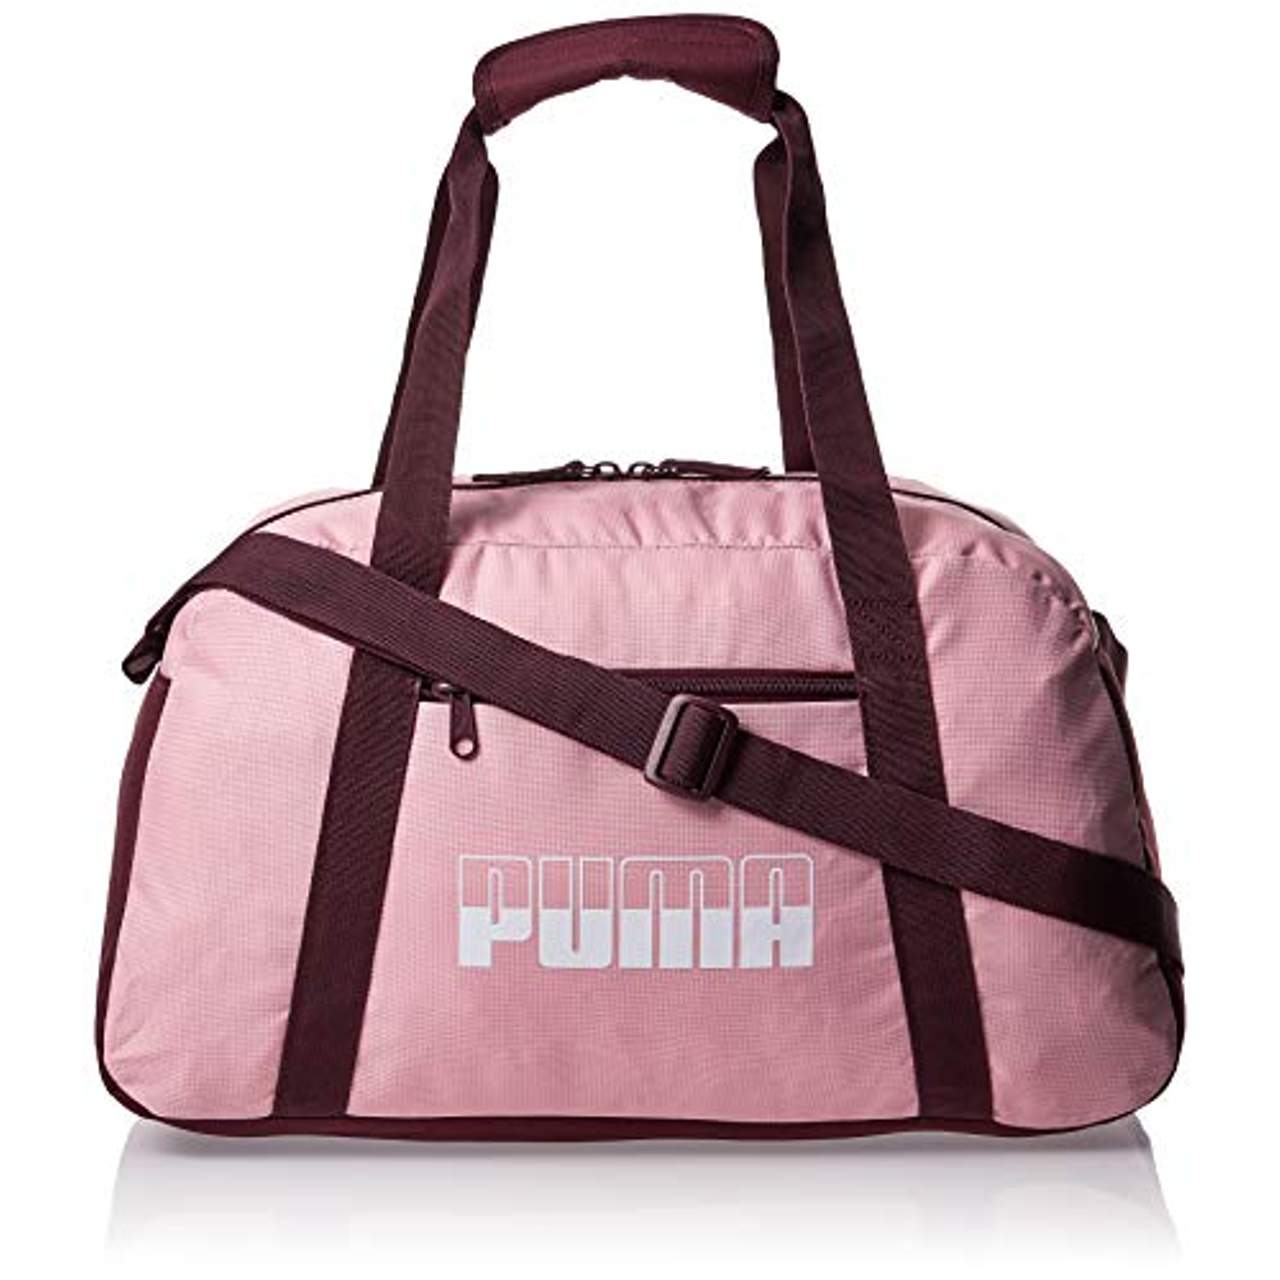 Puma Plus Sports Bag II Sporttasche Weinrot-Bridal Rosa